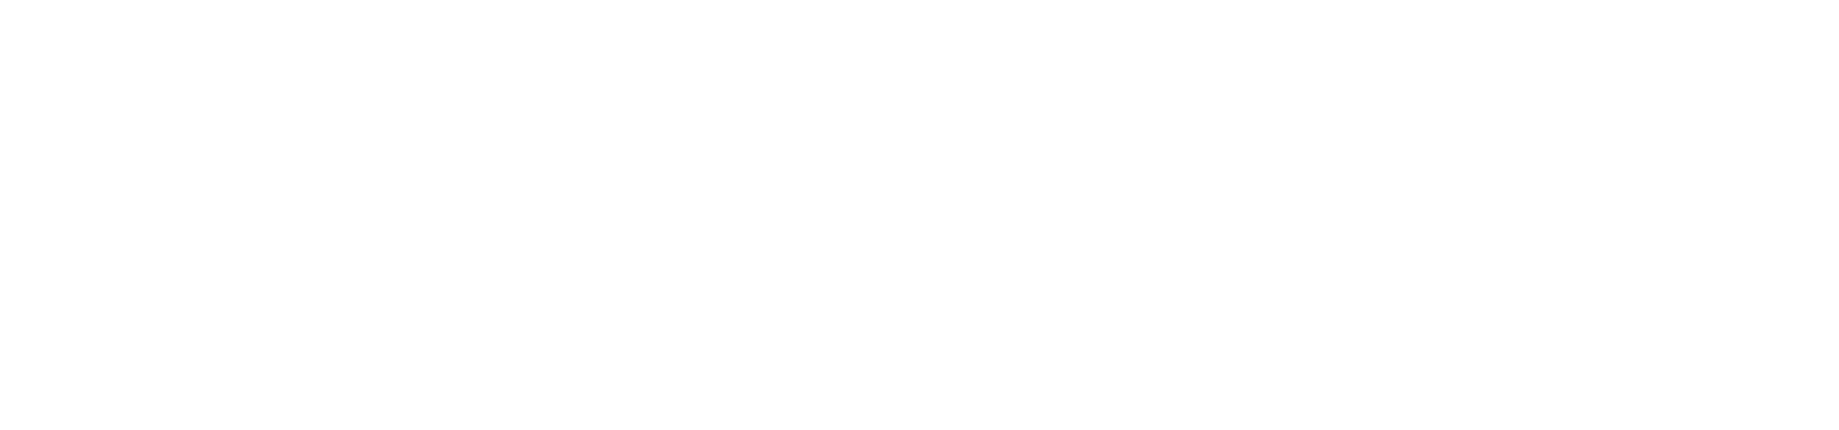 Saint Paul Garden Club